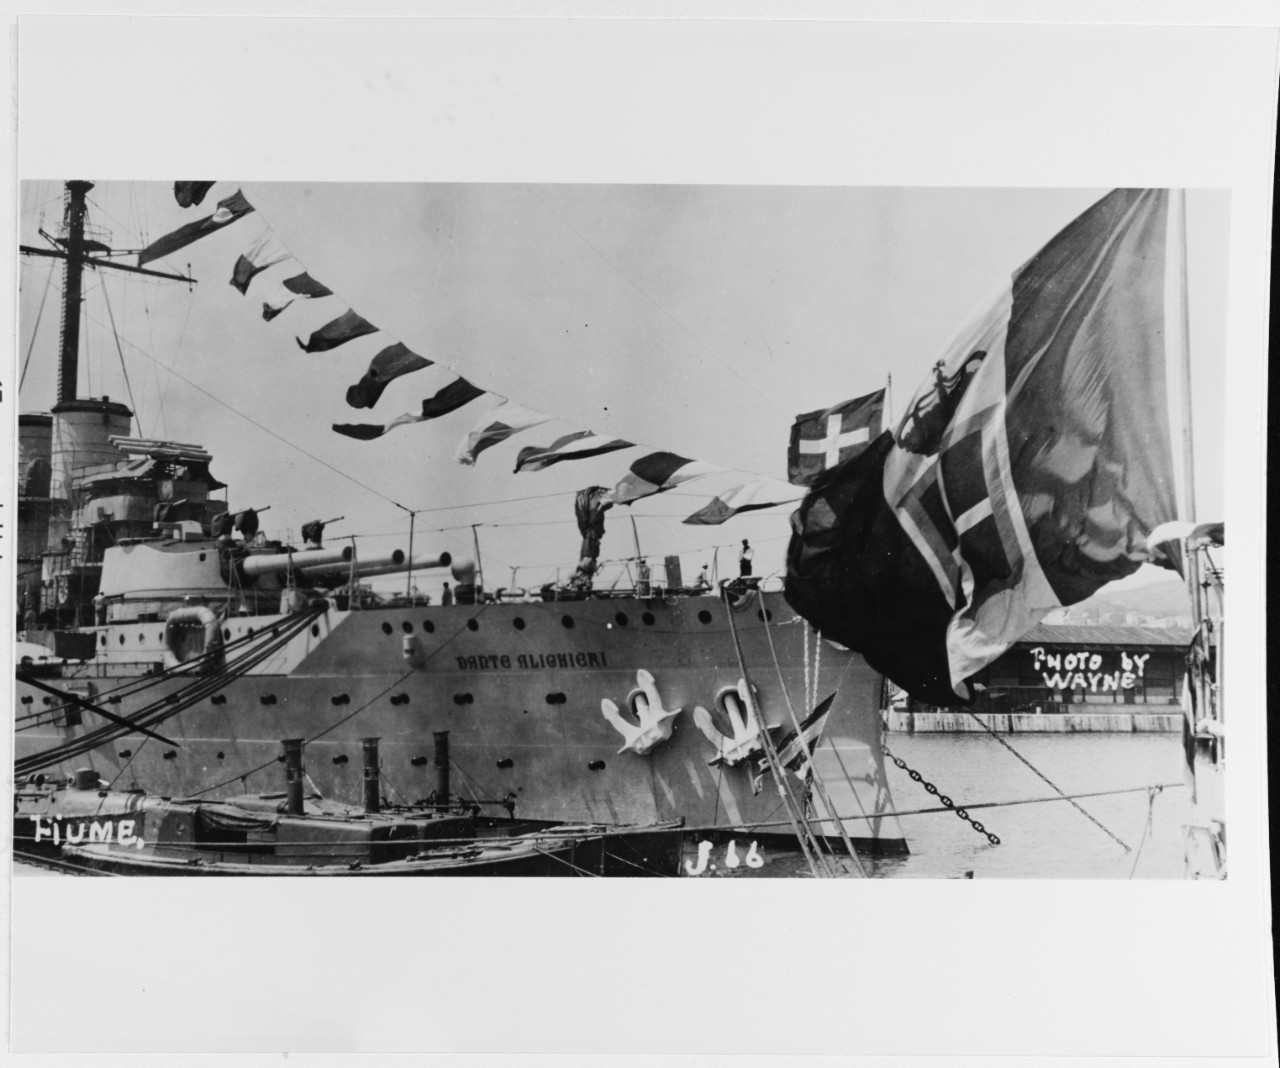 DANTE ALIGHIERI (Italian battleship, 1910-1928)